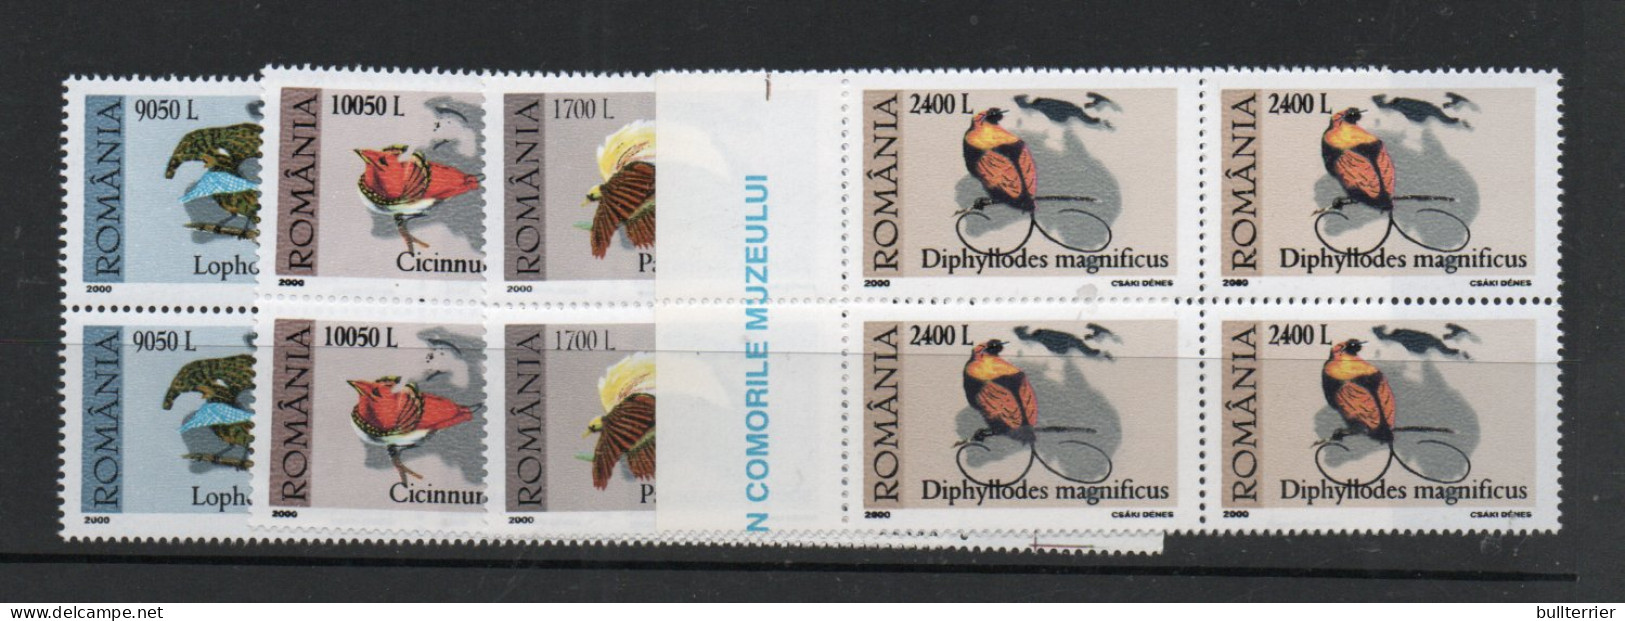 BIRDS  -  ROMANIA - 2000 - BIRDS OF PARADISE  SET OF 4 IN BLOCKS OF 4  MINT NEVER HINGED, SG CAT £23.60 - Duiven En Duifachtigen